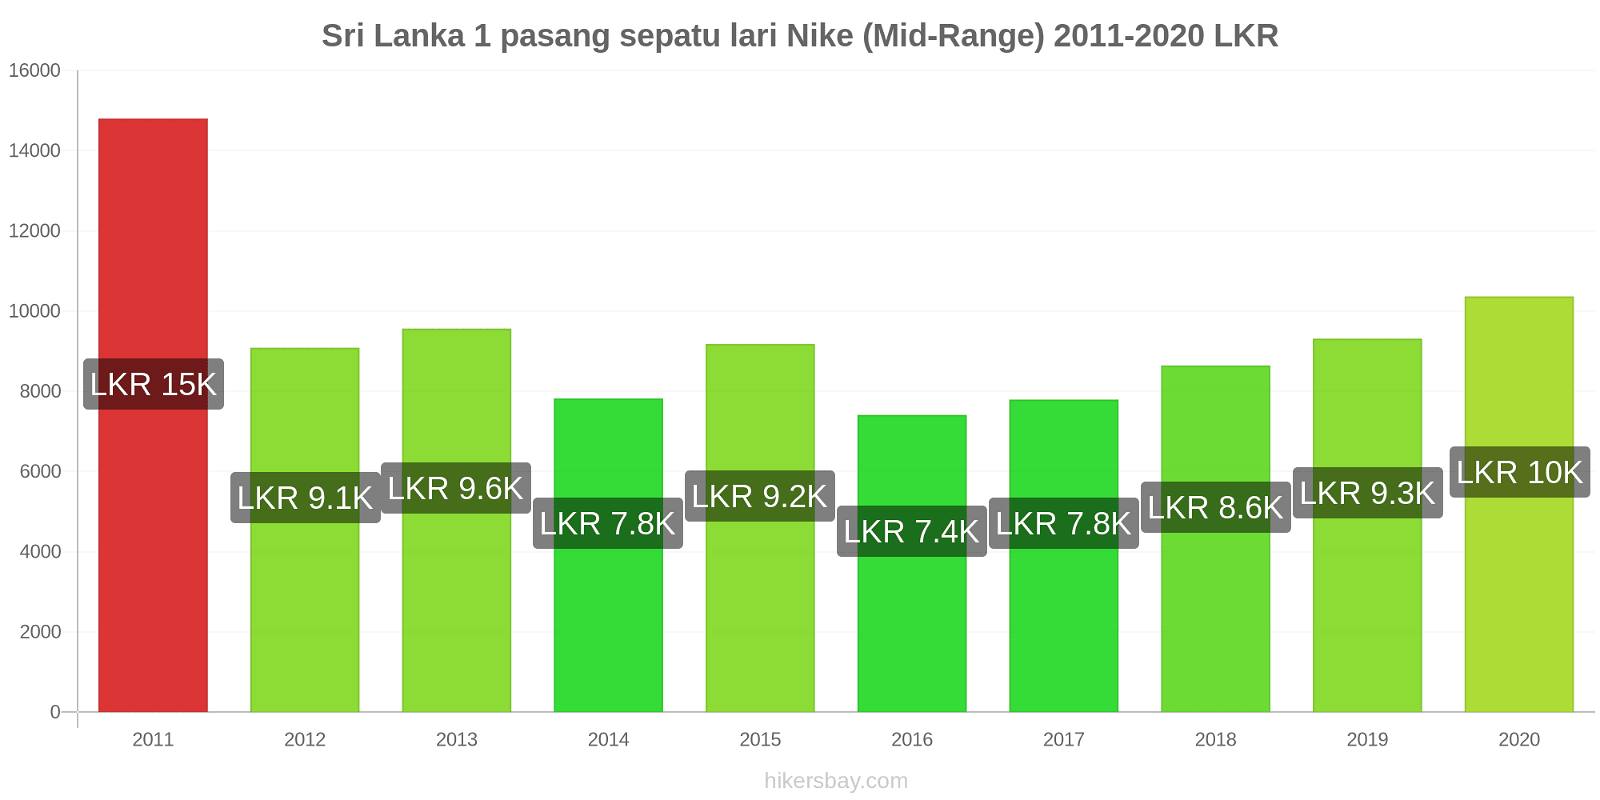 Sri Lanka perubahan harga 1 pasang sepatu lari Nike (Mid-Range) hikersbay.com